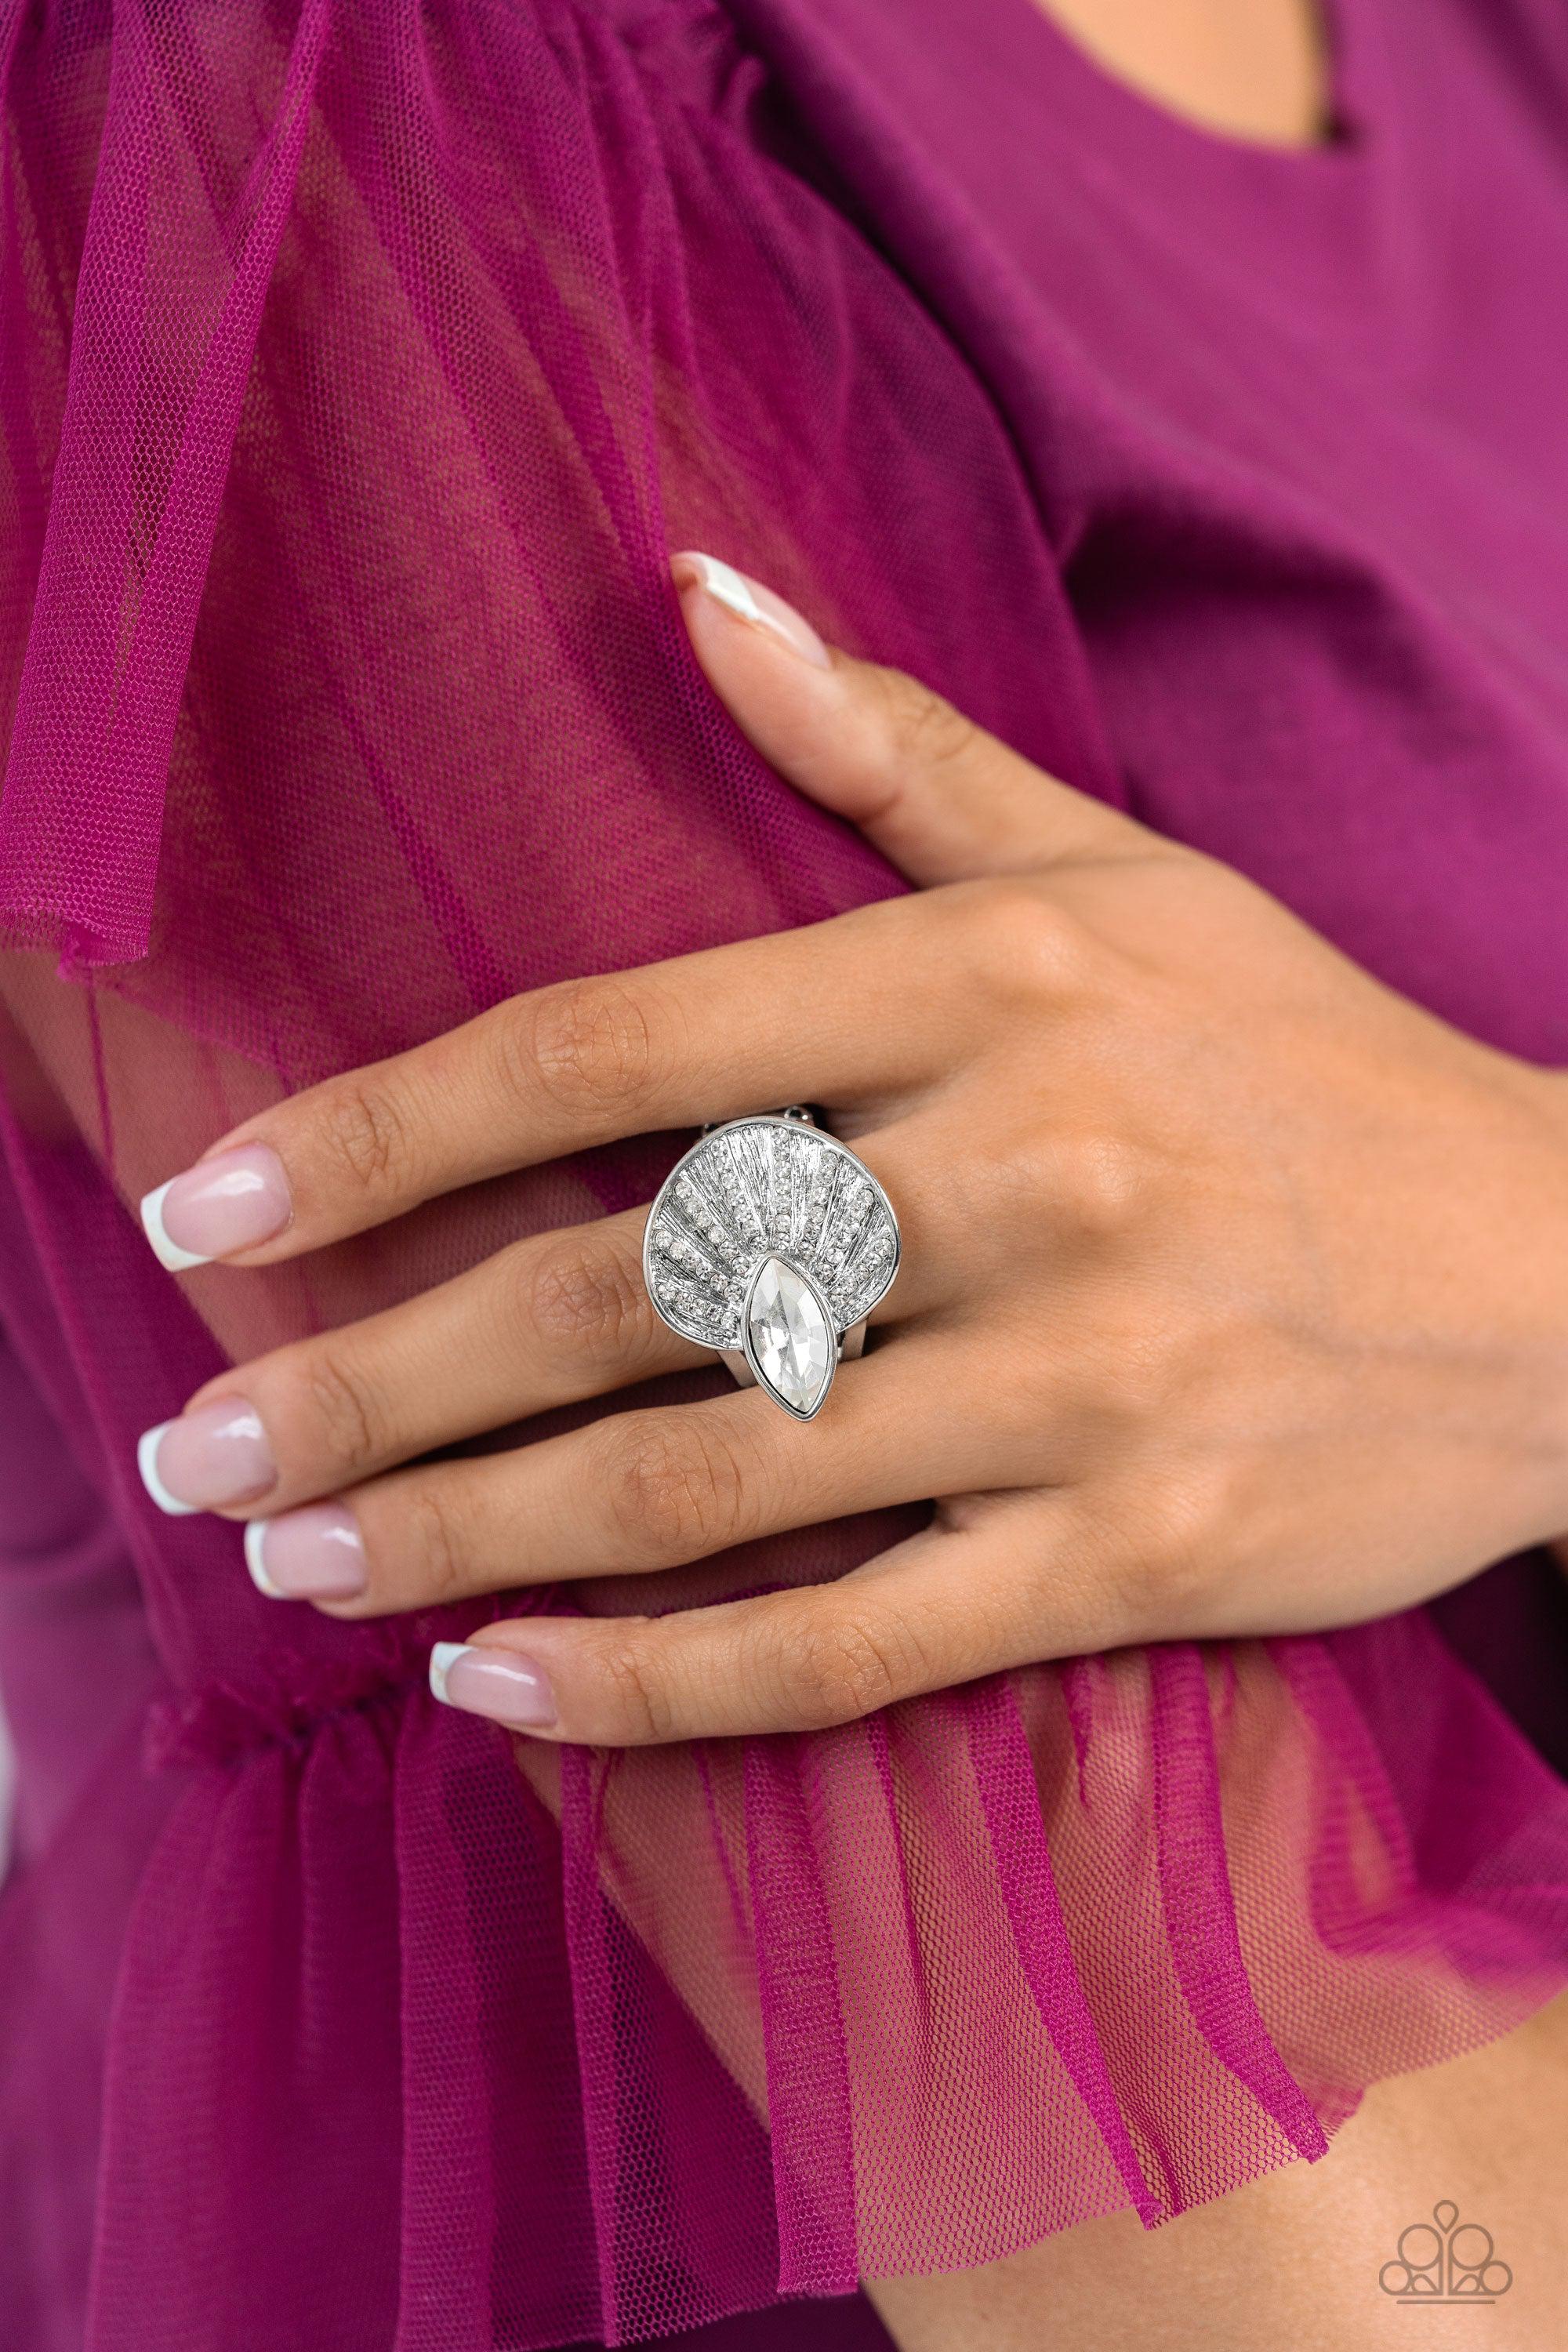 Fan Dance Dazzle White Rhinestone Ring - Paparazzi Accessories- lightbox - CarasShop.com - $5 Jewelry by Cara Jewels